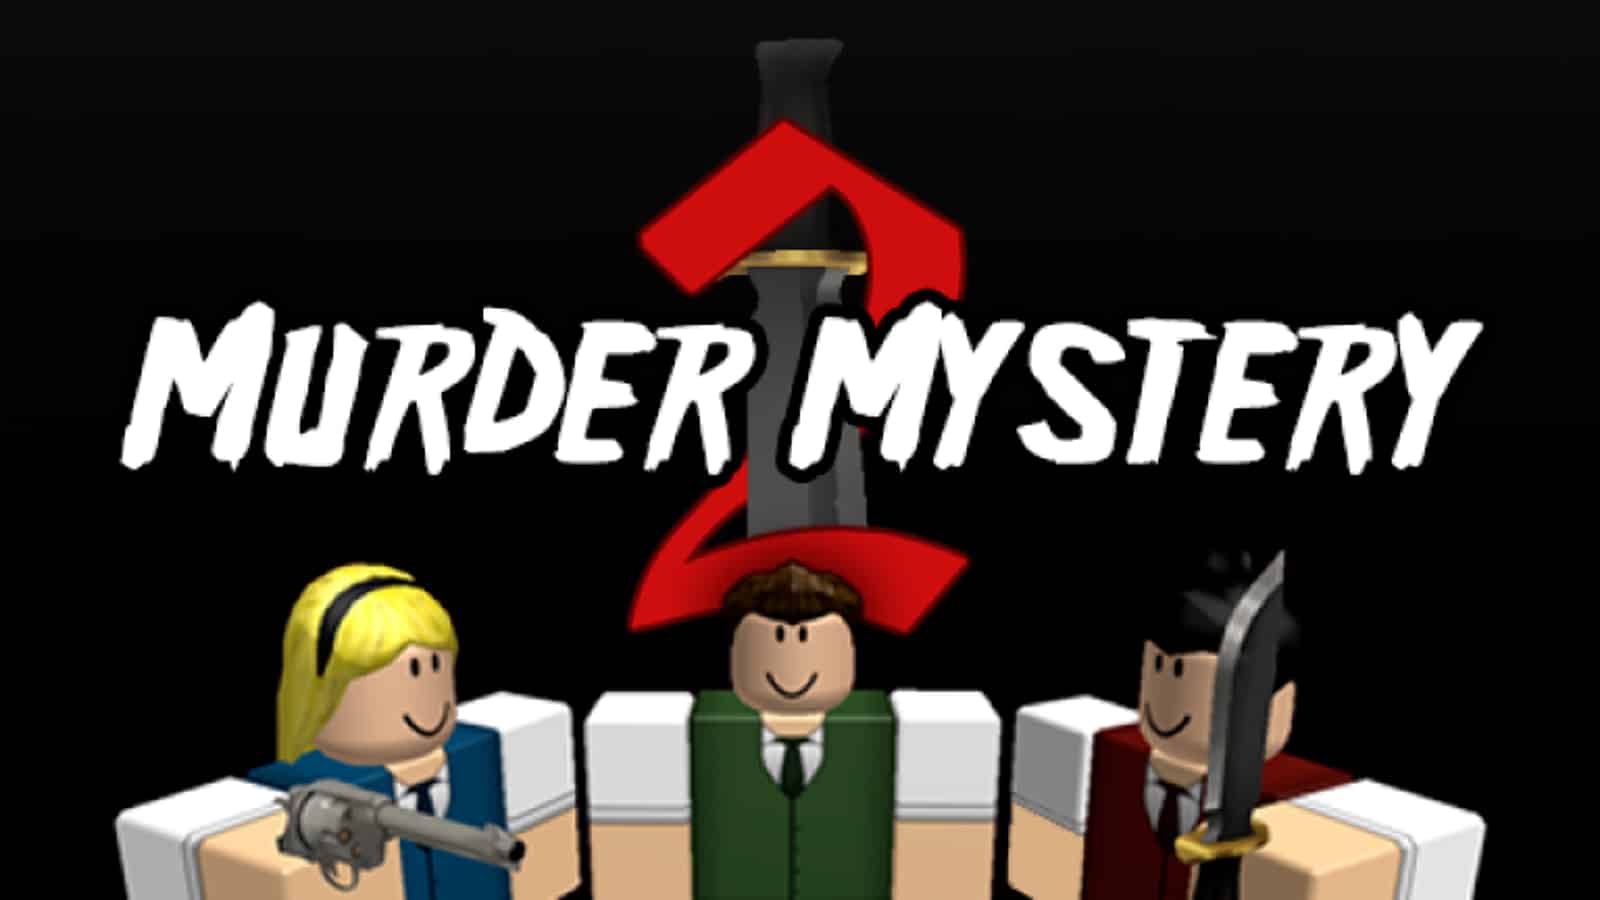 Roblox's Murder Mystery 2 کی ایک تصویر جسے MM2 بھی کہا جاتا ہے۔